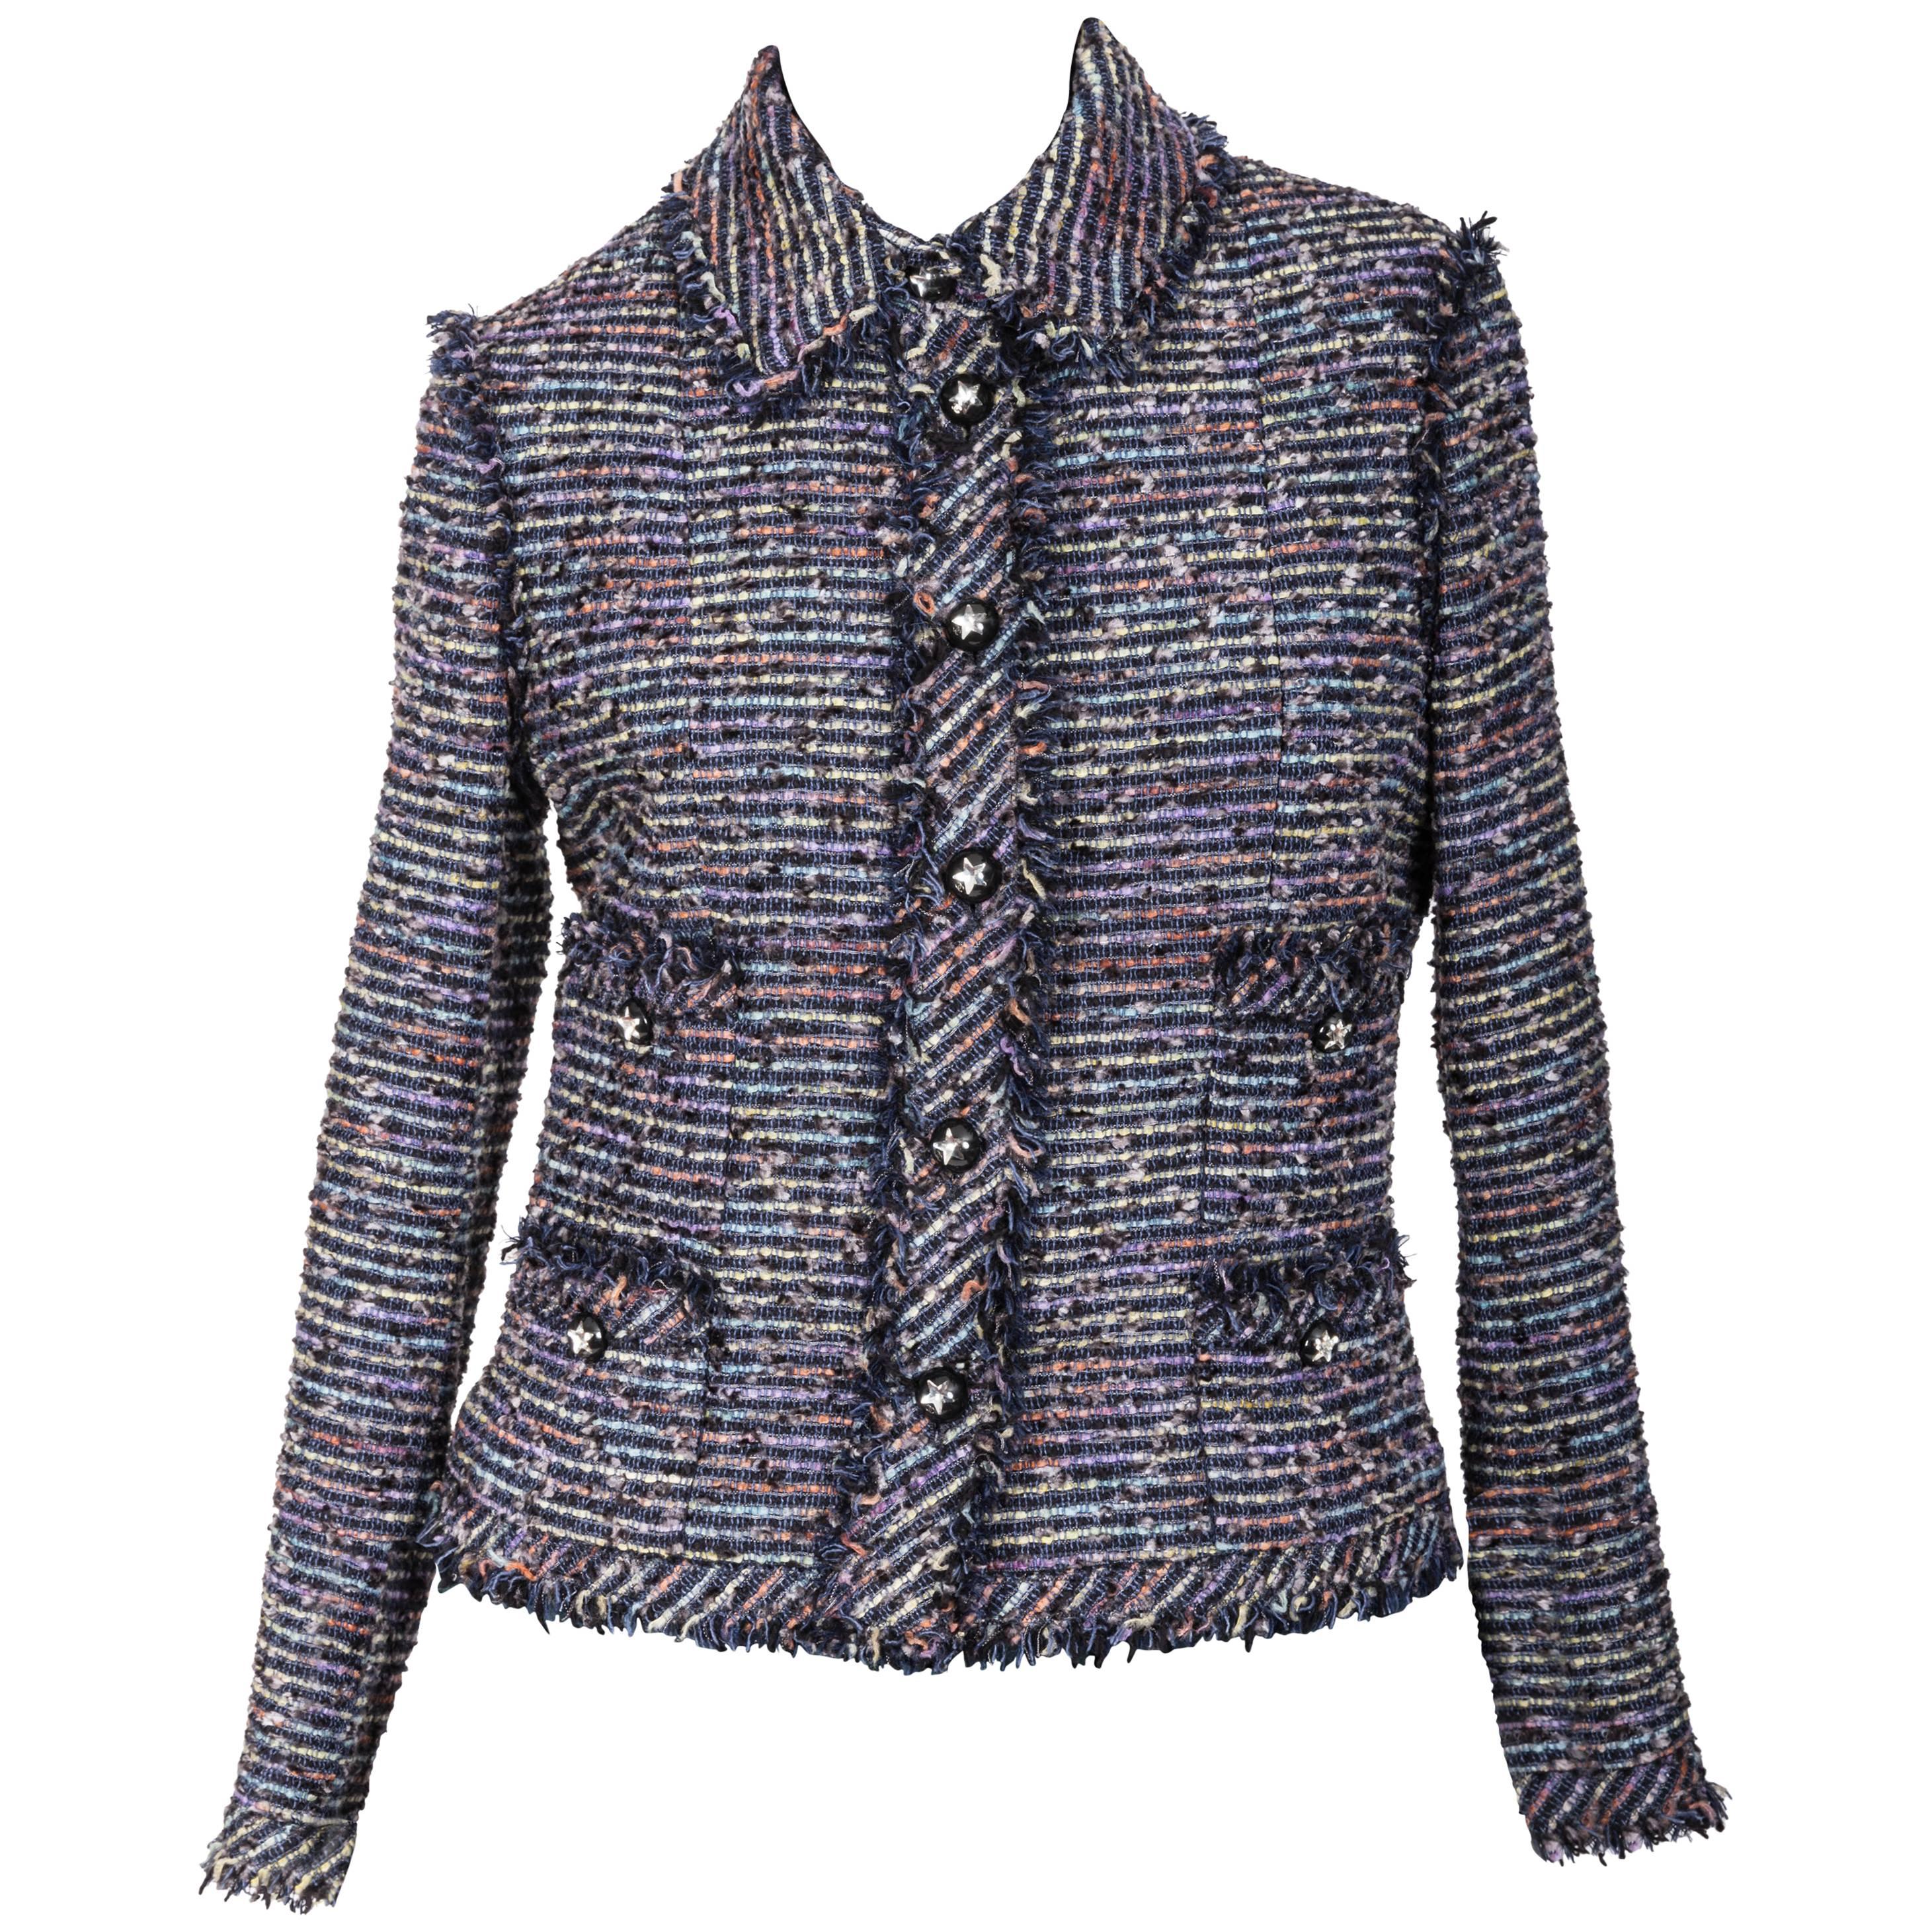 Chanel Tweed Jacket with Fringe Trim FR 40 / US 8